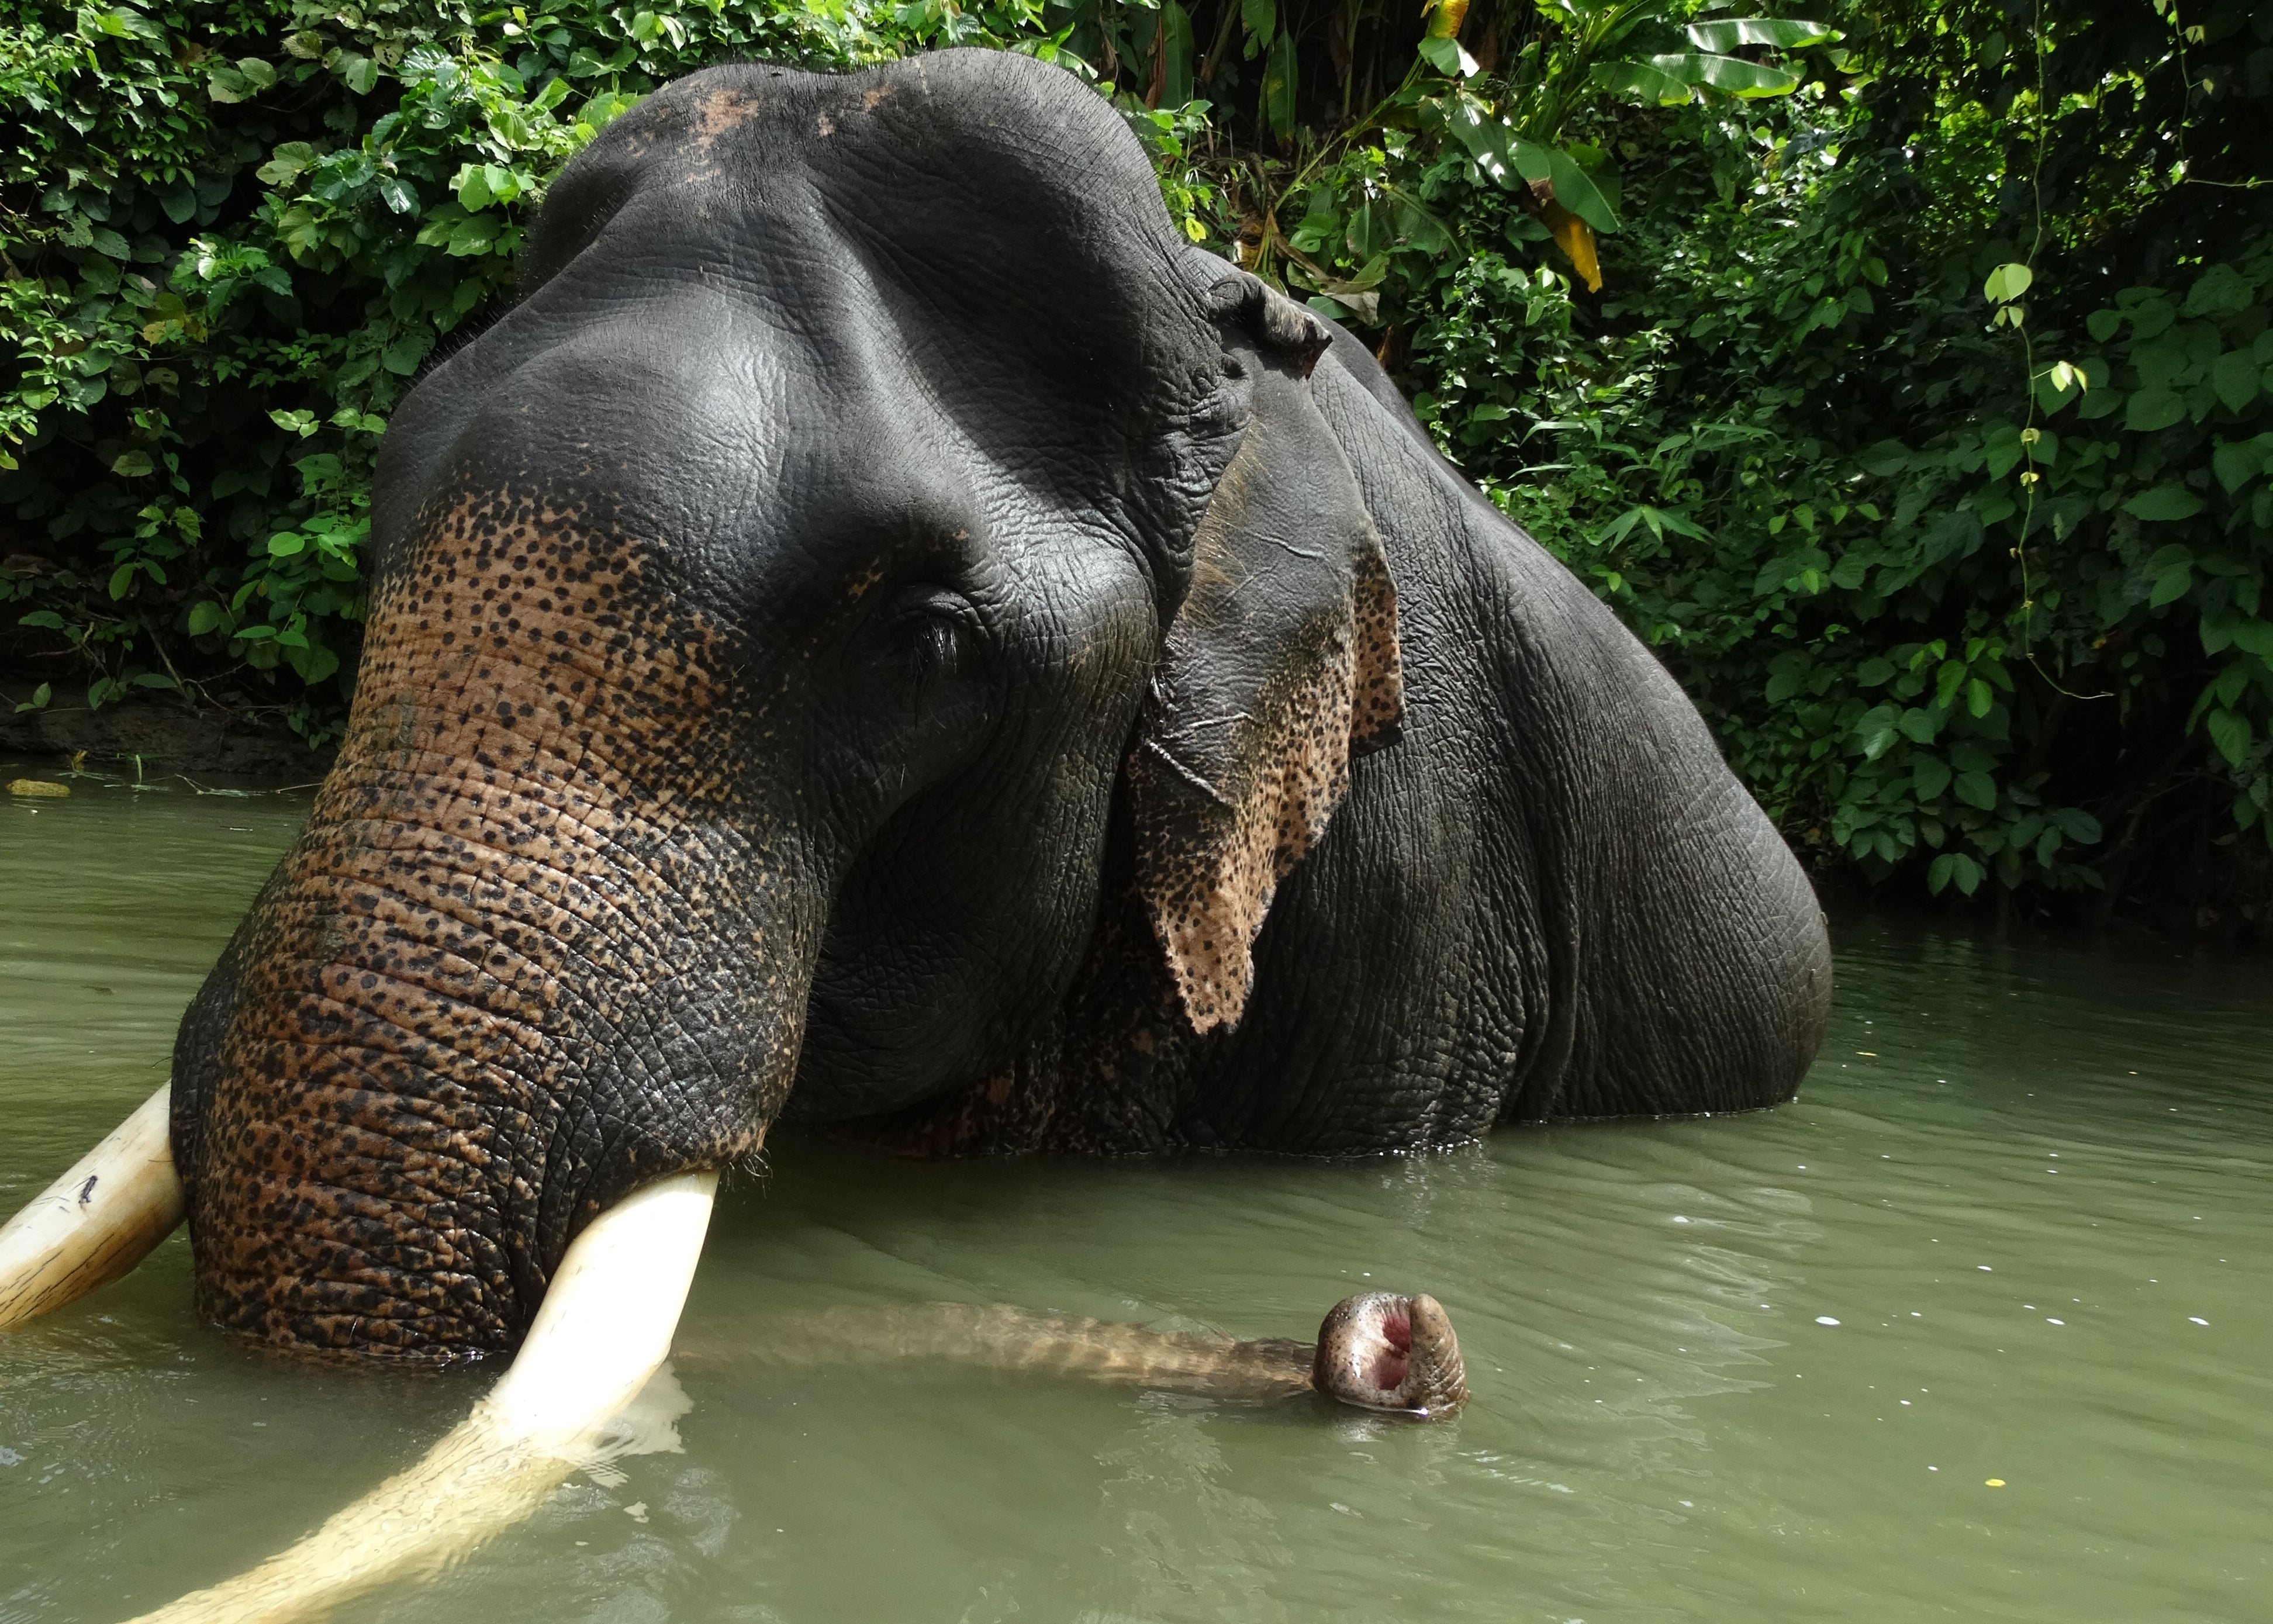 An Asian elephant in the water in Myanmar